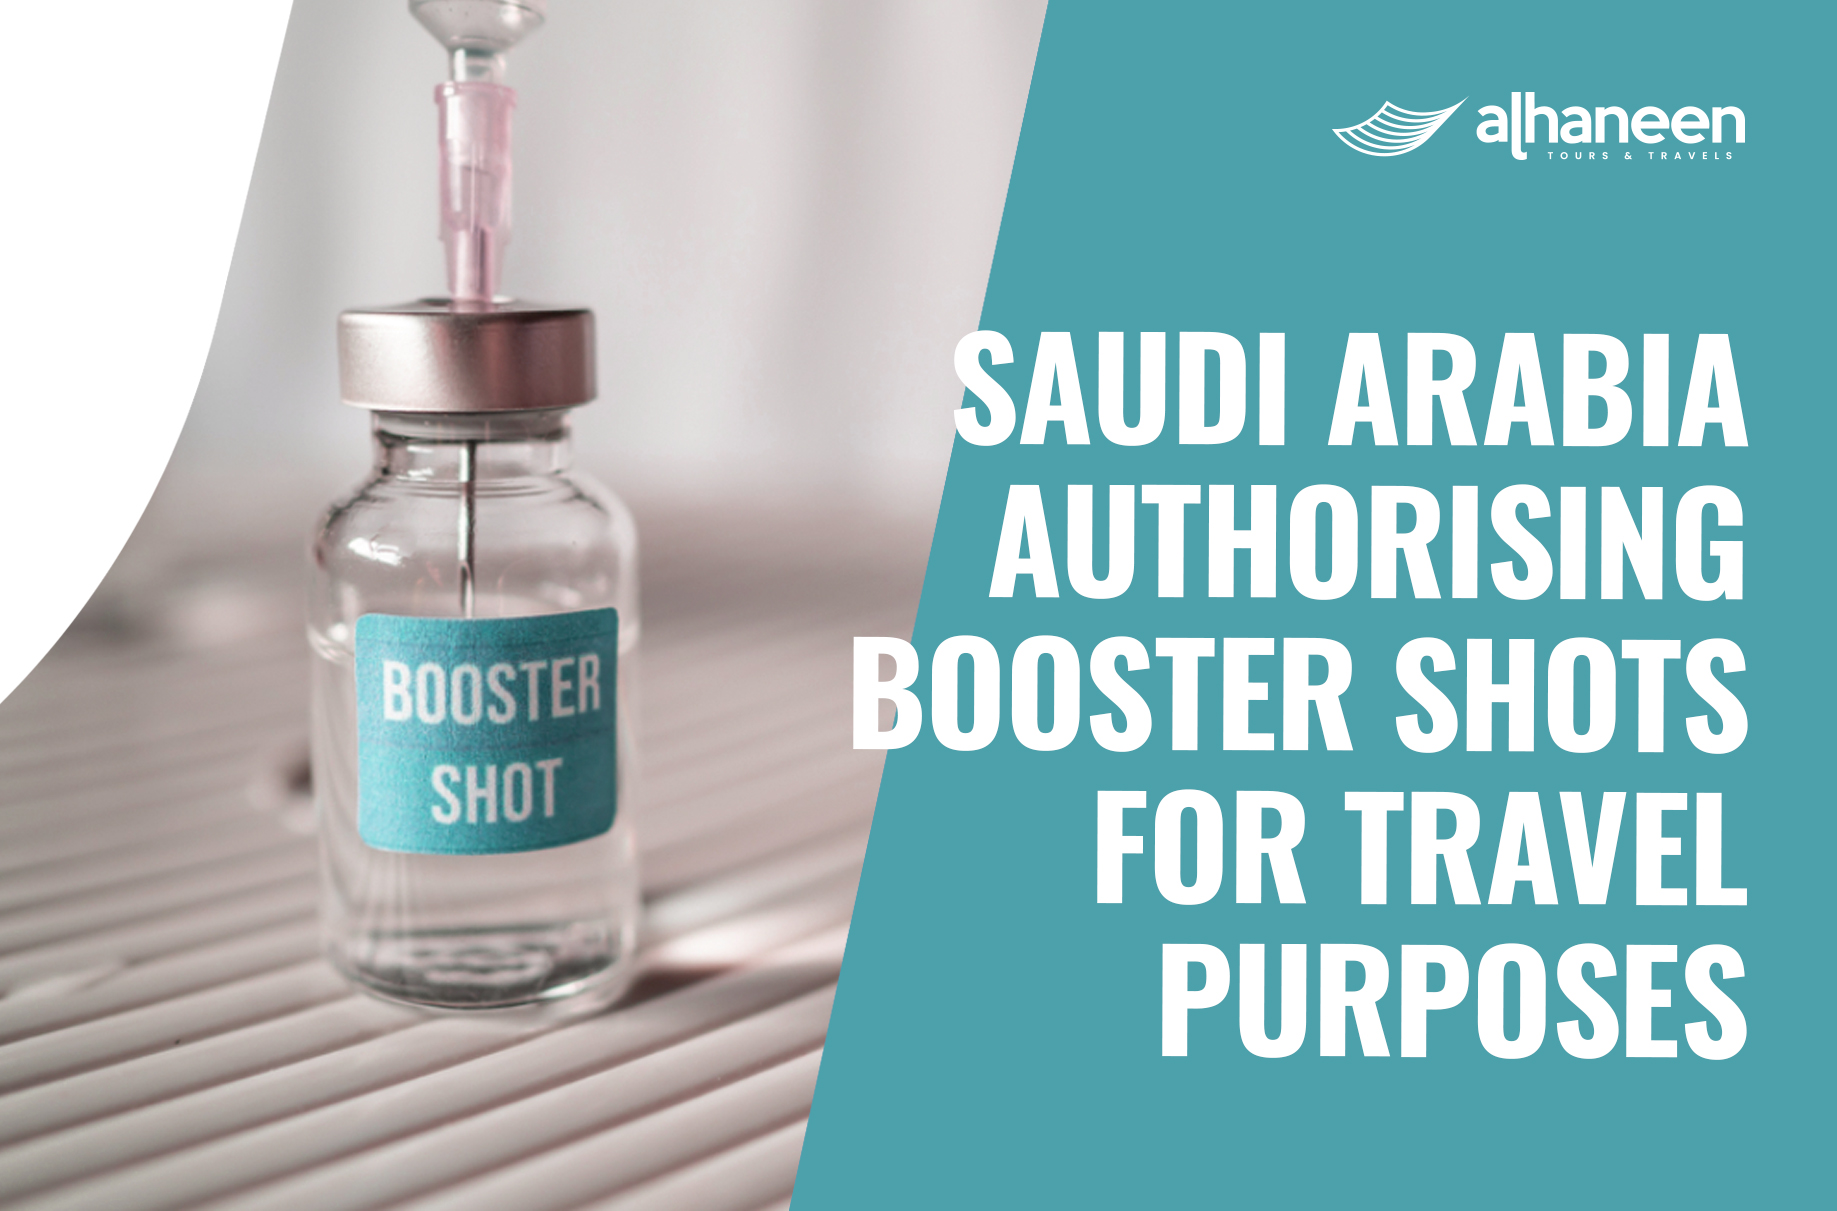 Saudi Arabia authorising booster shots for travel purposes: